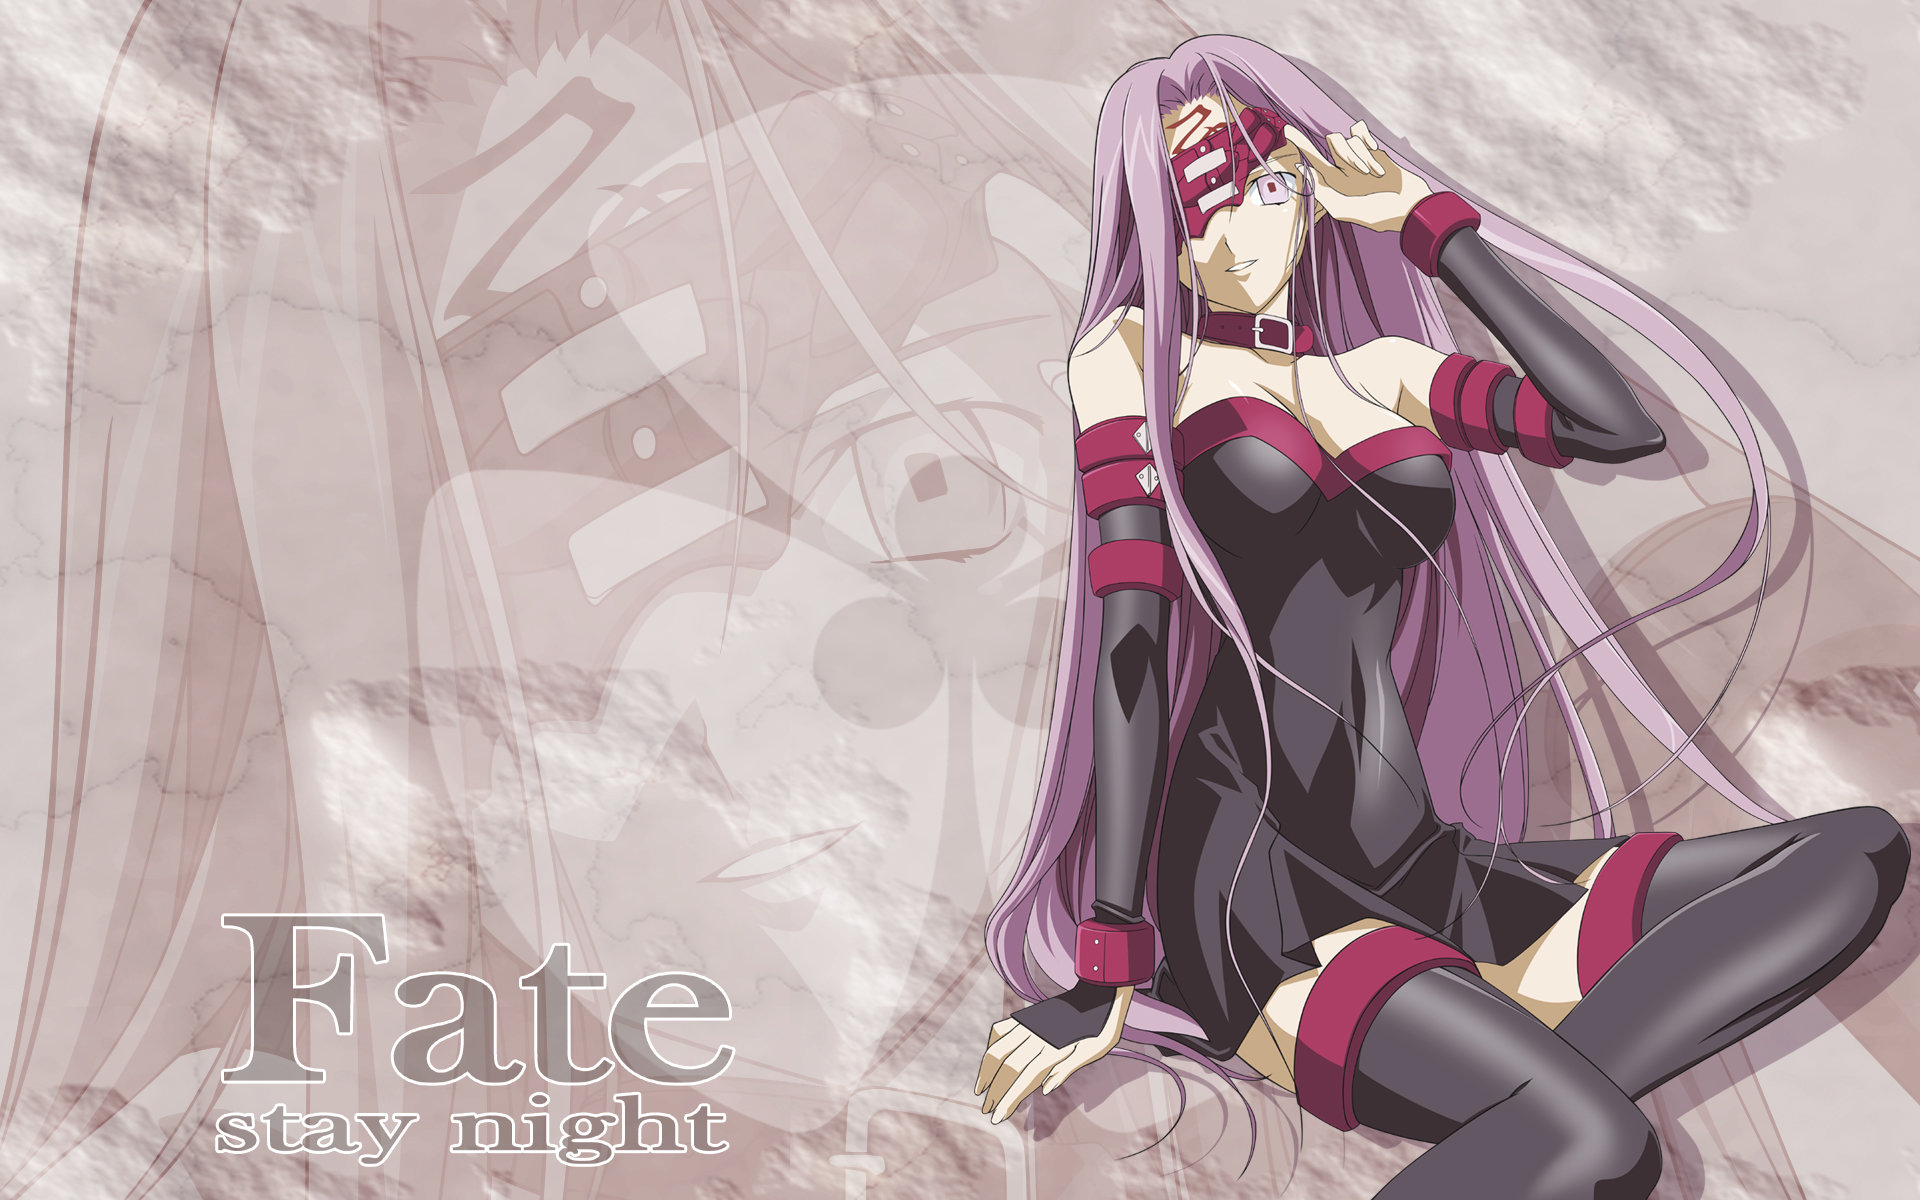 Best Rider (Fate/stay Night) wallpaper ID:468798 for High Resolution hd 1920x1200 desktop